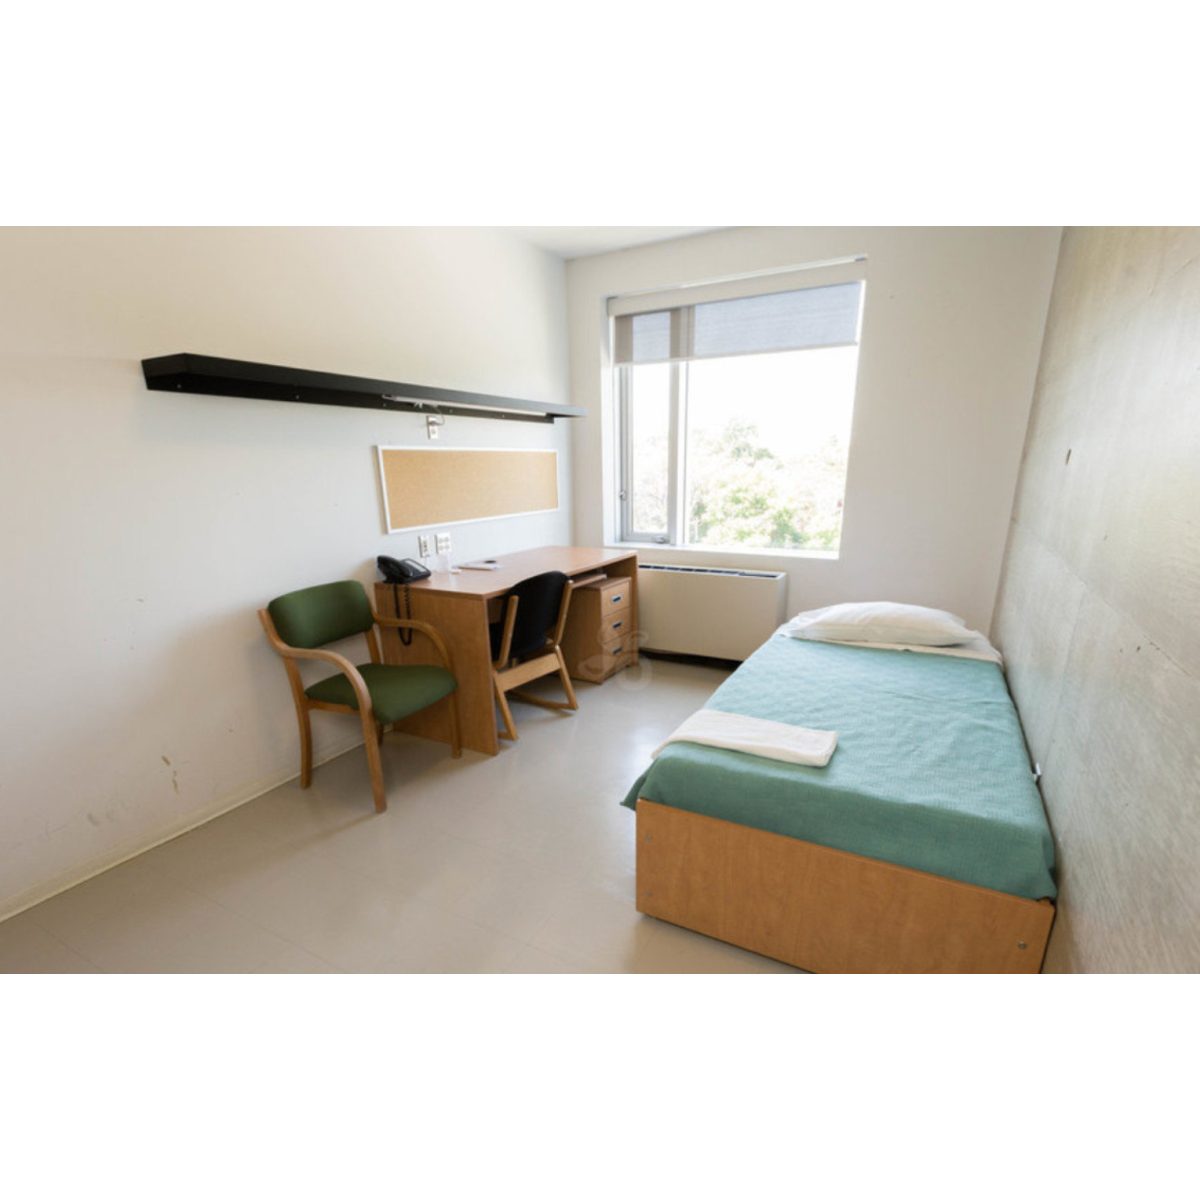 Single room in Innsbruck student housing; suitable for Erasmus students 2